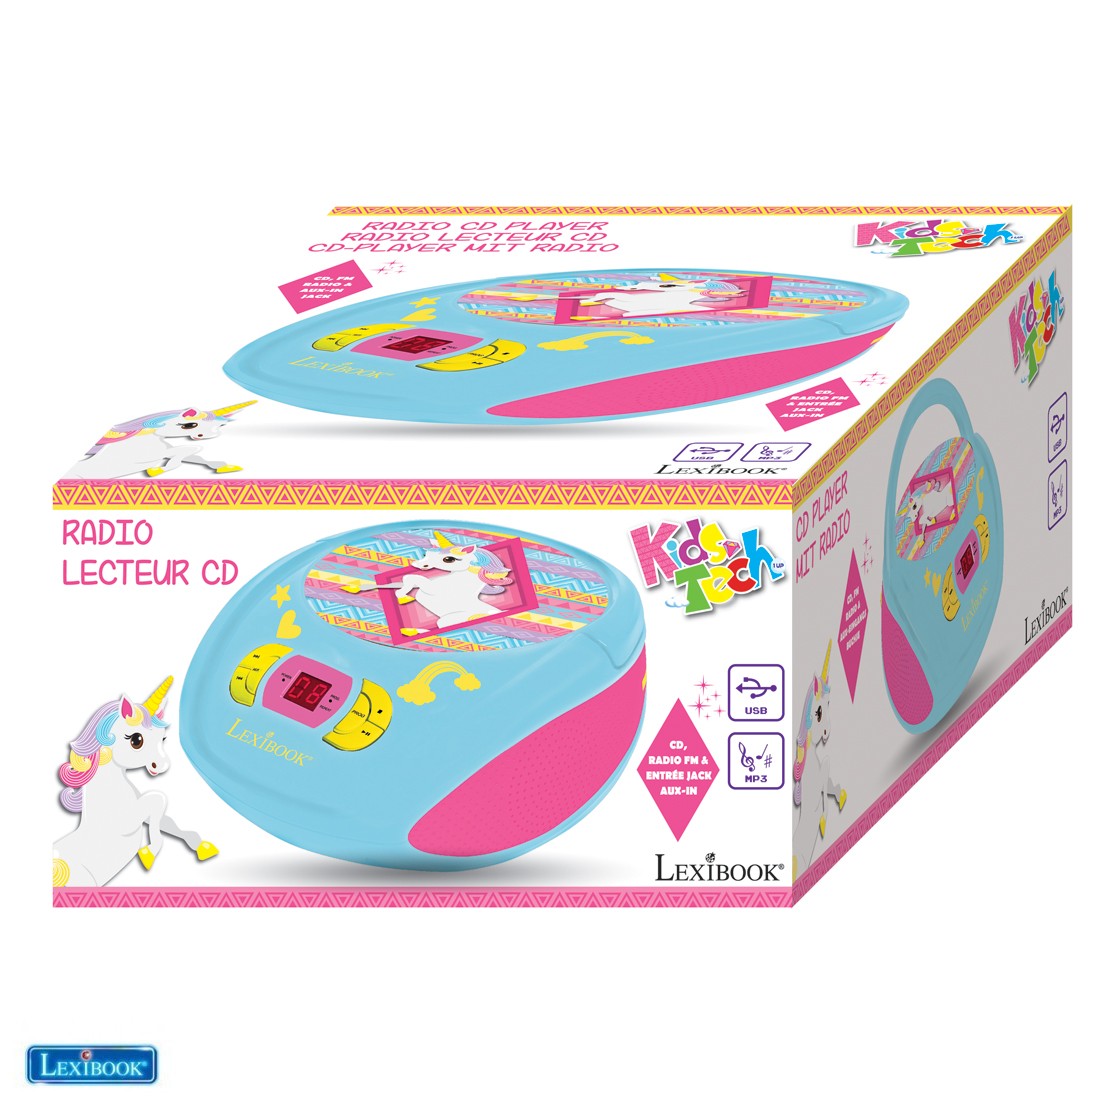 Lexibook - toy story 4 - radio lecteur cd enfant LEXRCD108TS